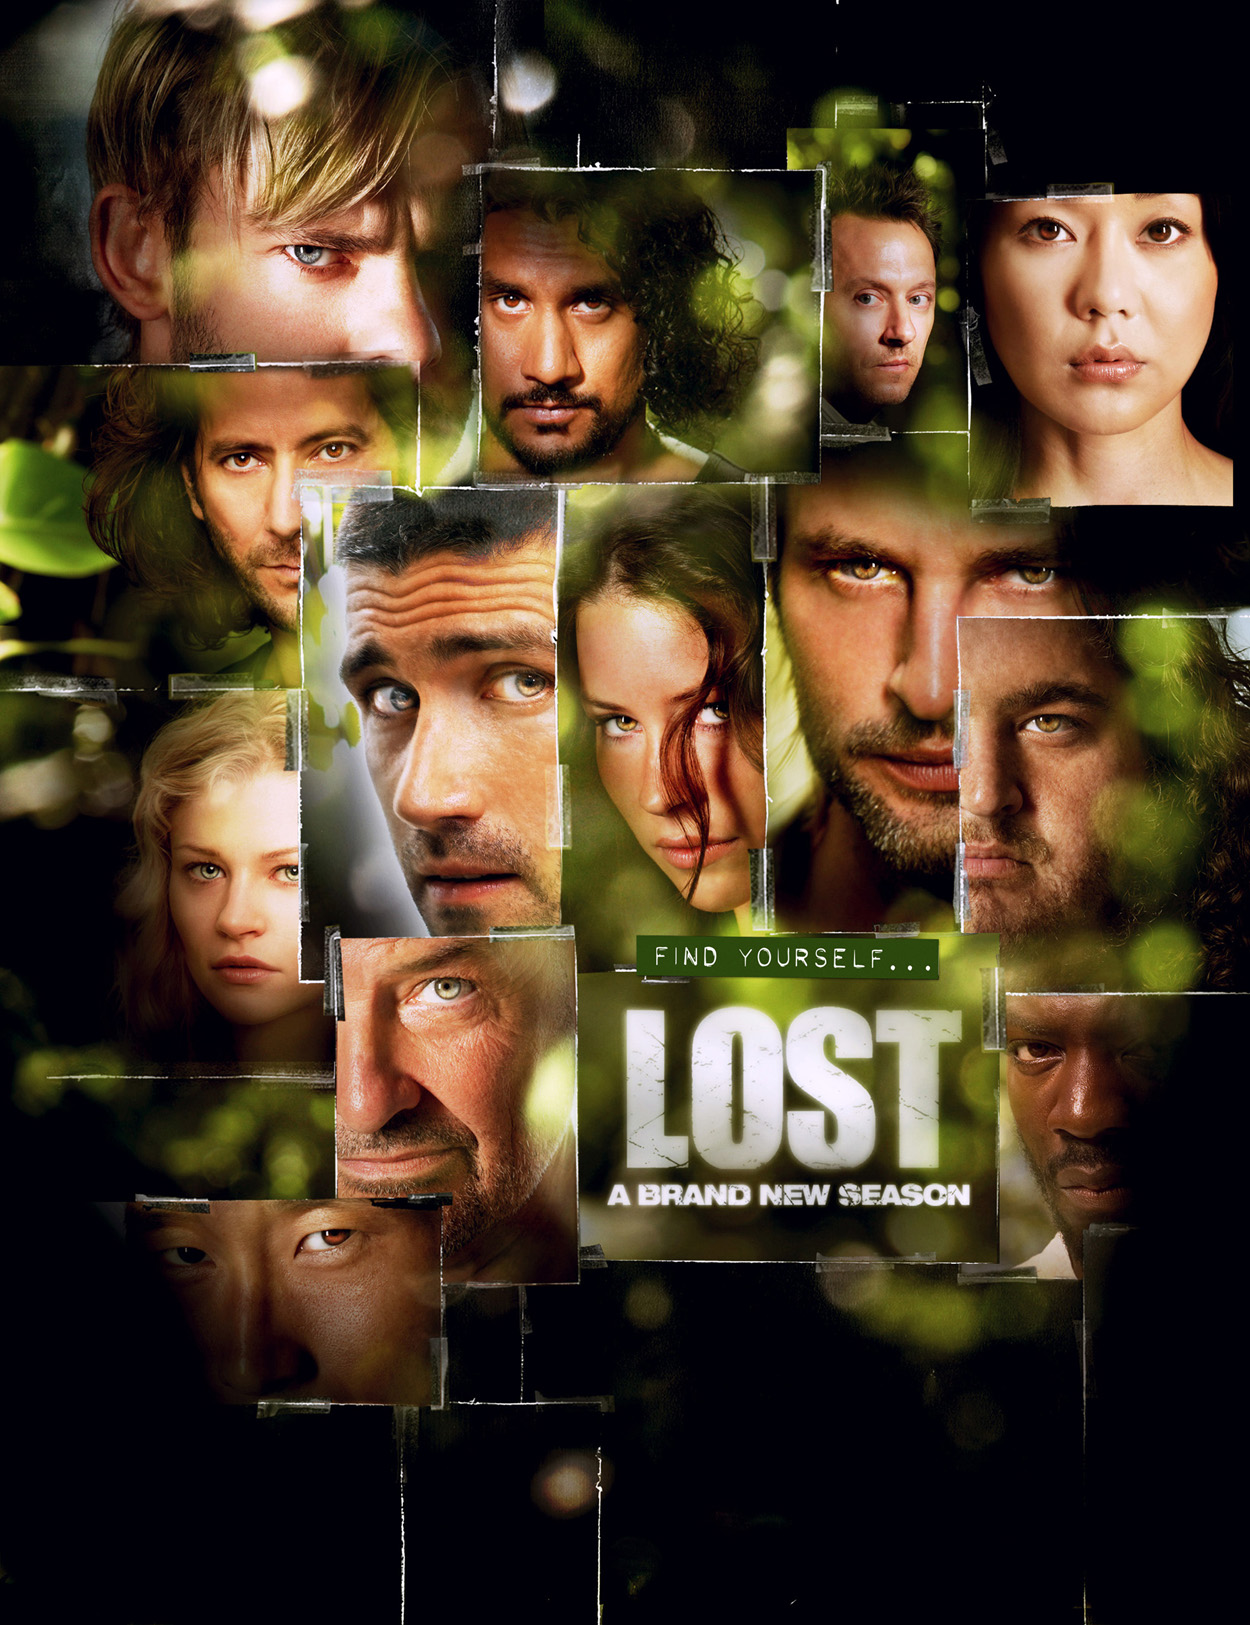 lost season 2 episode 11 cast